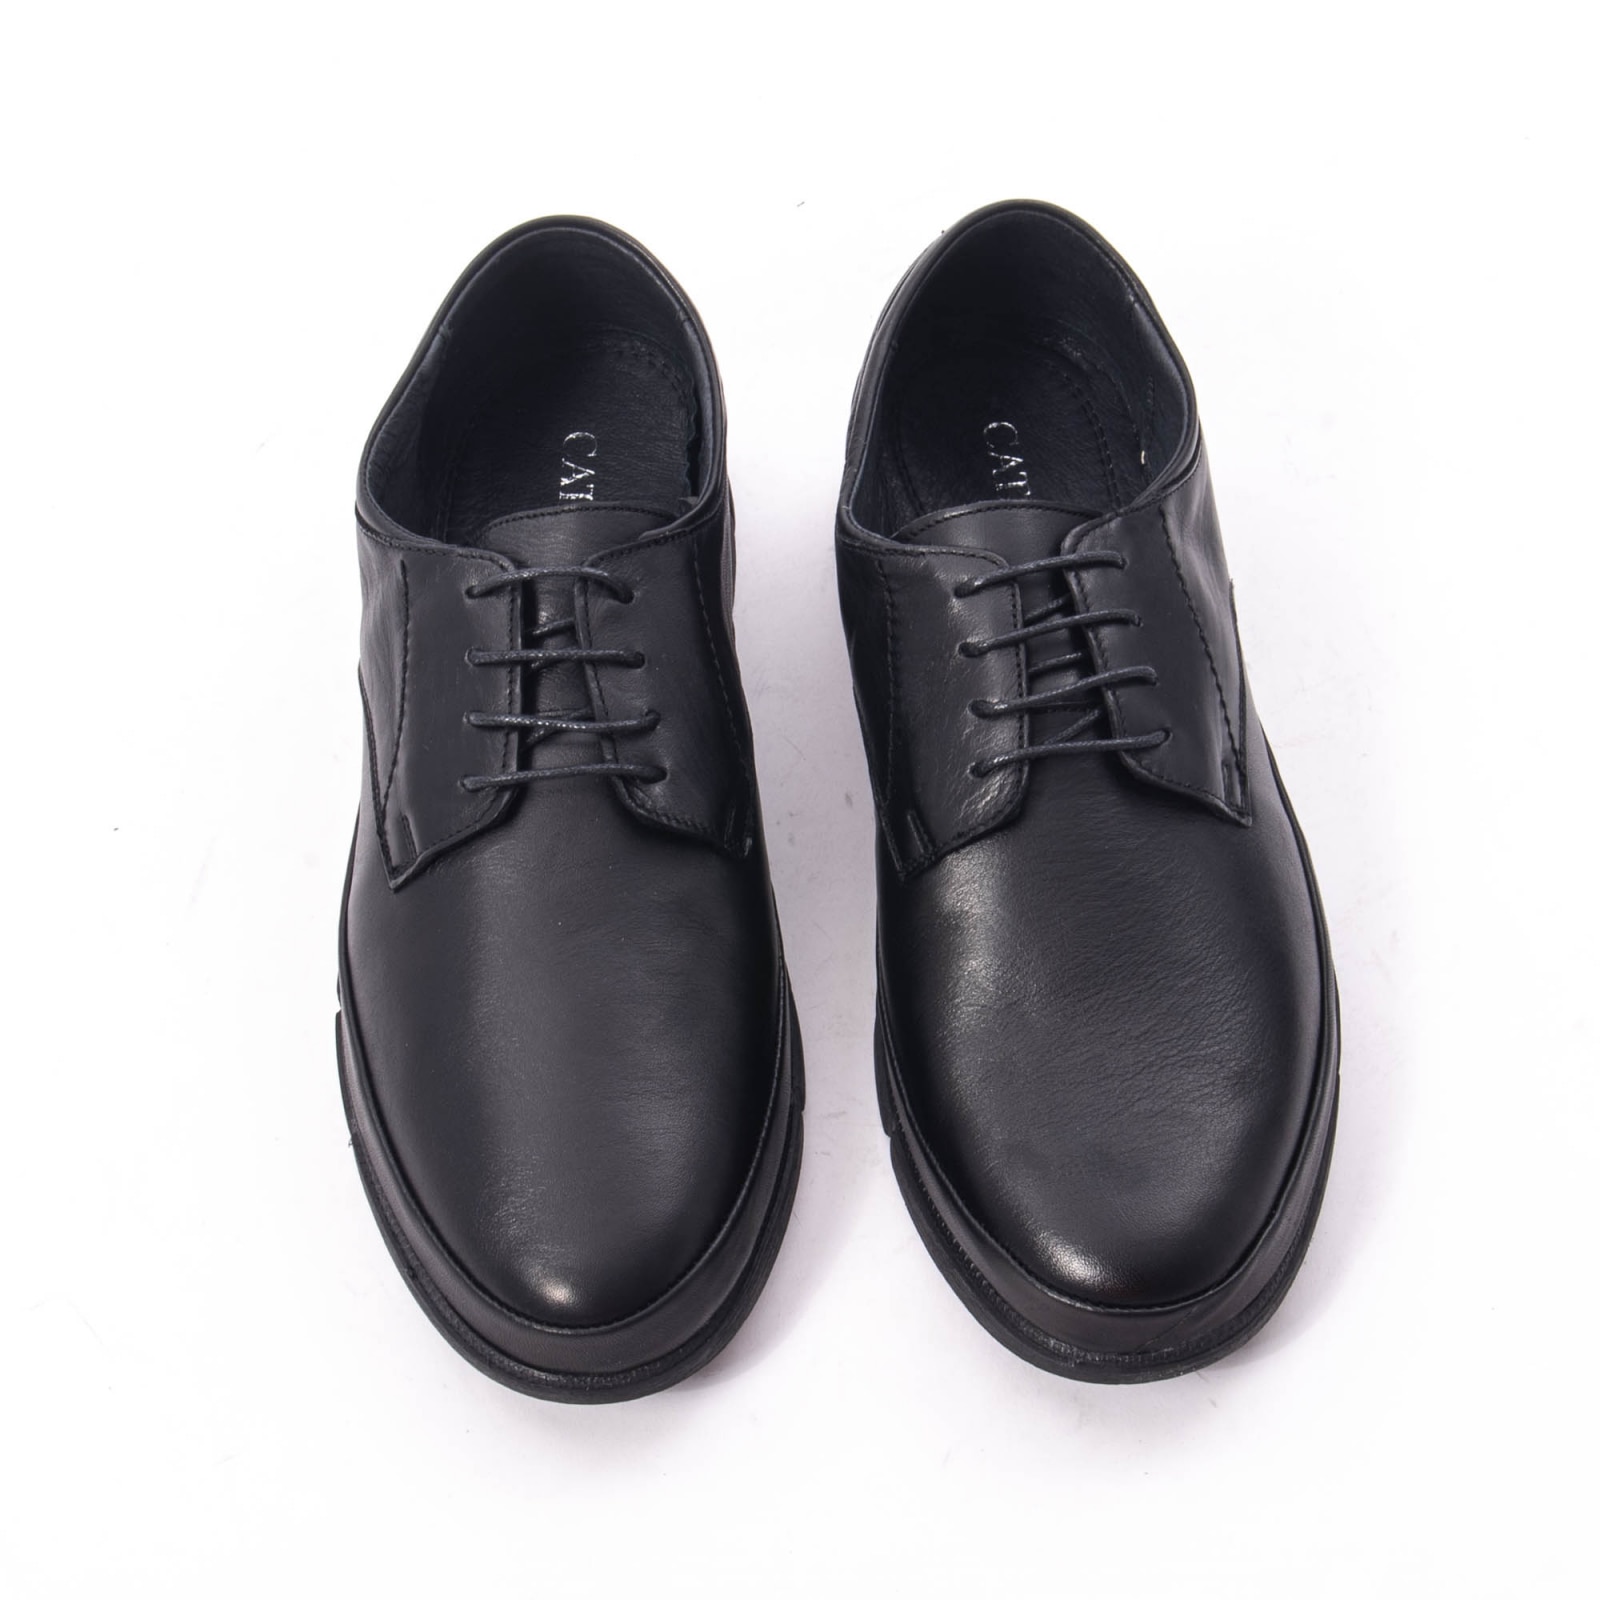 Chap provoke perspective Pantofi casual de barbat din piele naturala, Catali 192550 negru 40 EU -  eMAG.ro